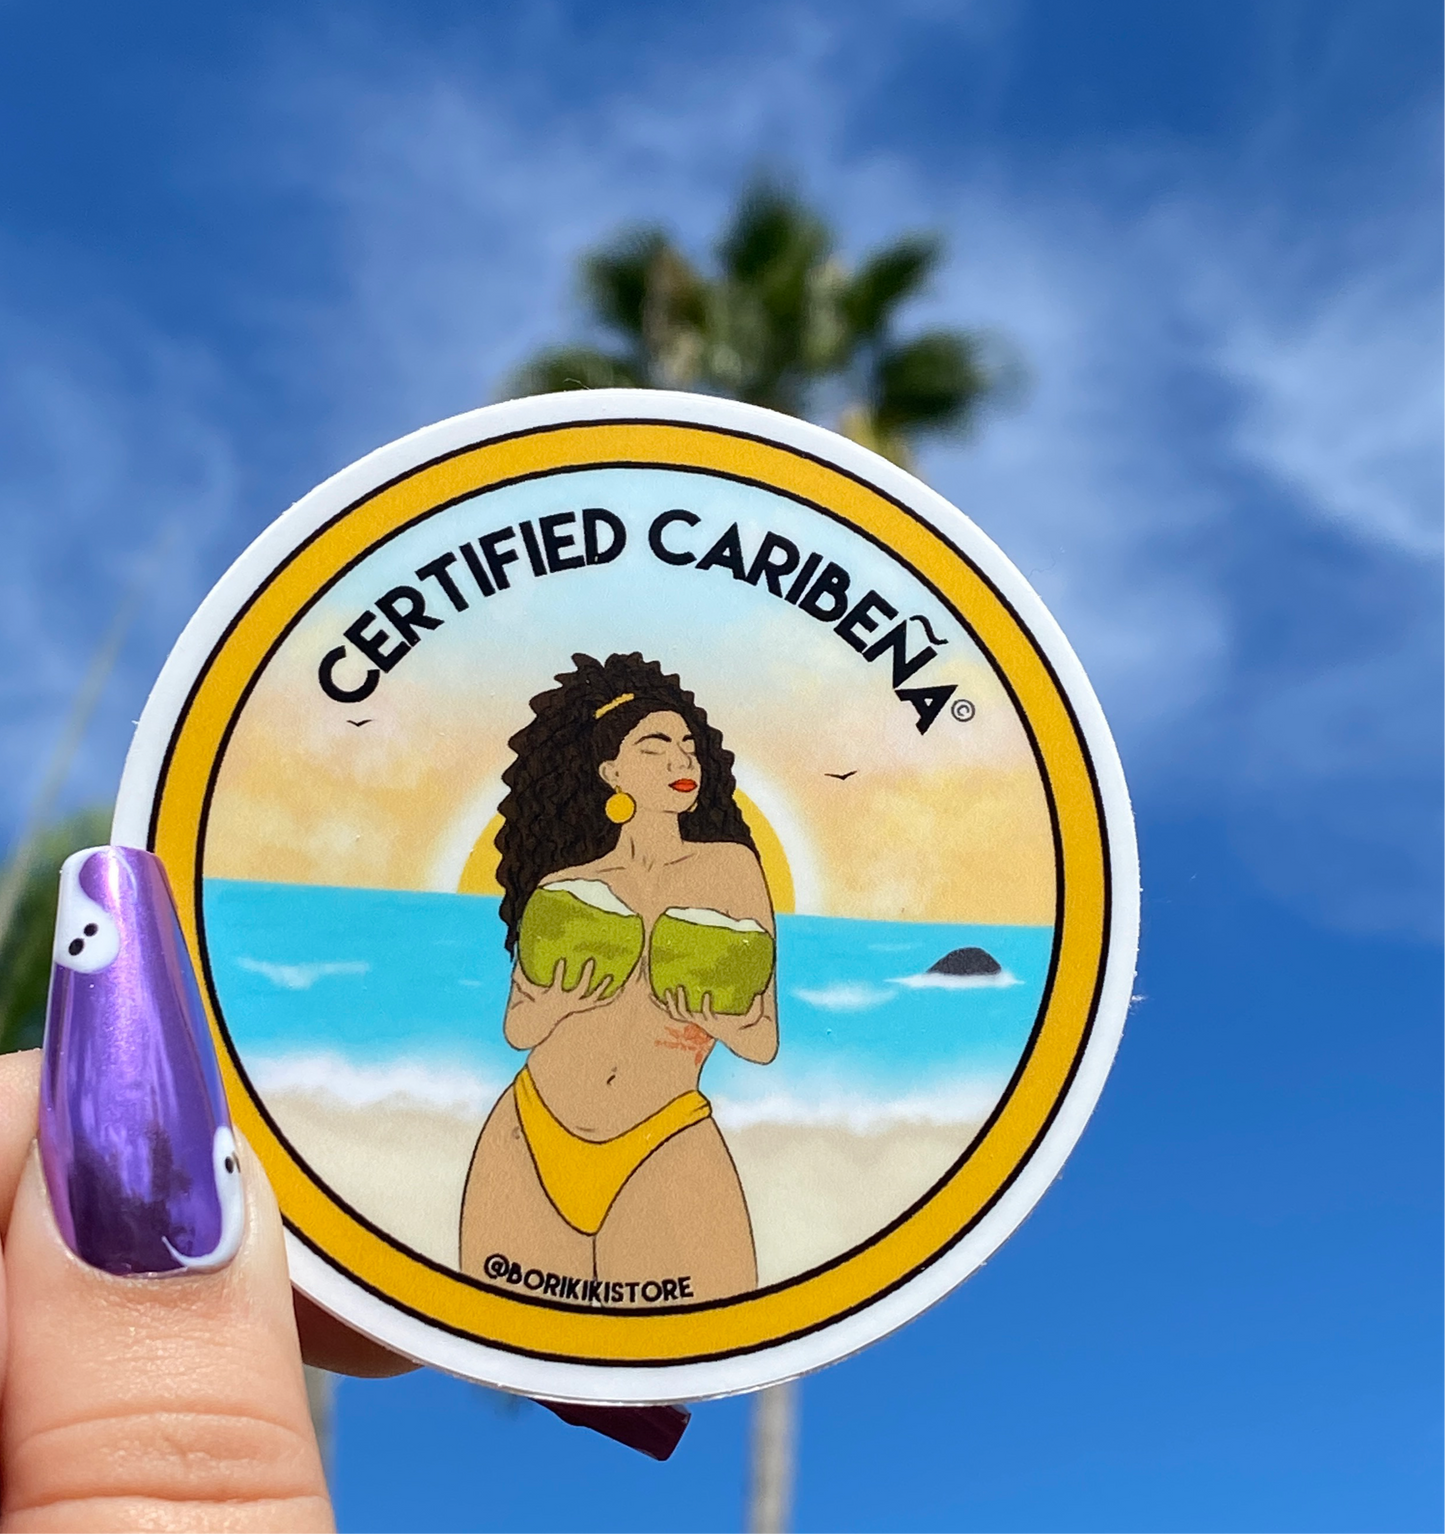 Certified Caribeña